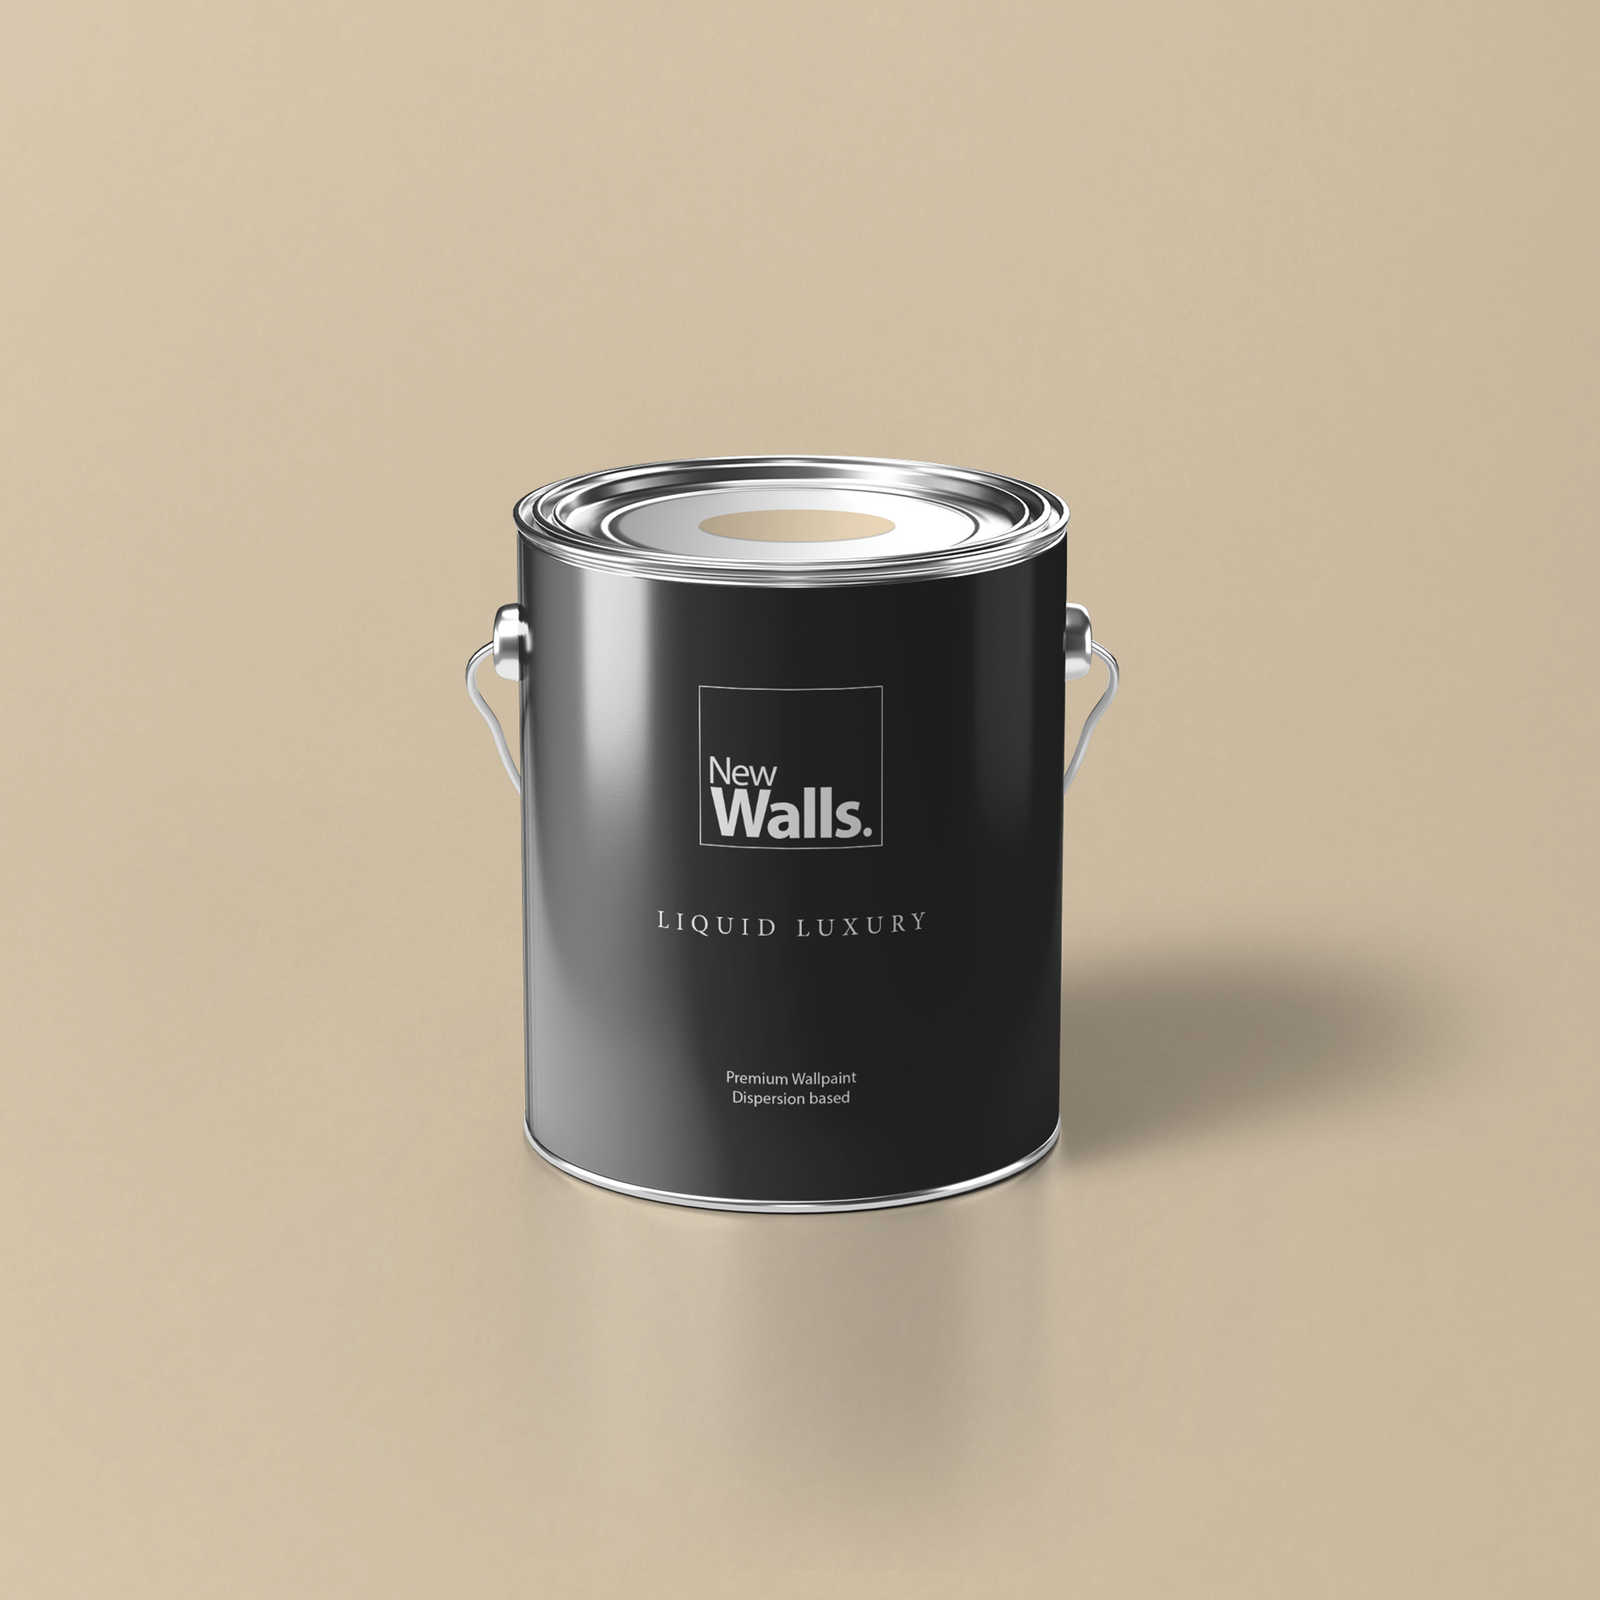 Premium Wall Paint Timeless Champagne »Beige Orange/Sassy Saffron« NW808 – 2.5 litre
